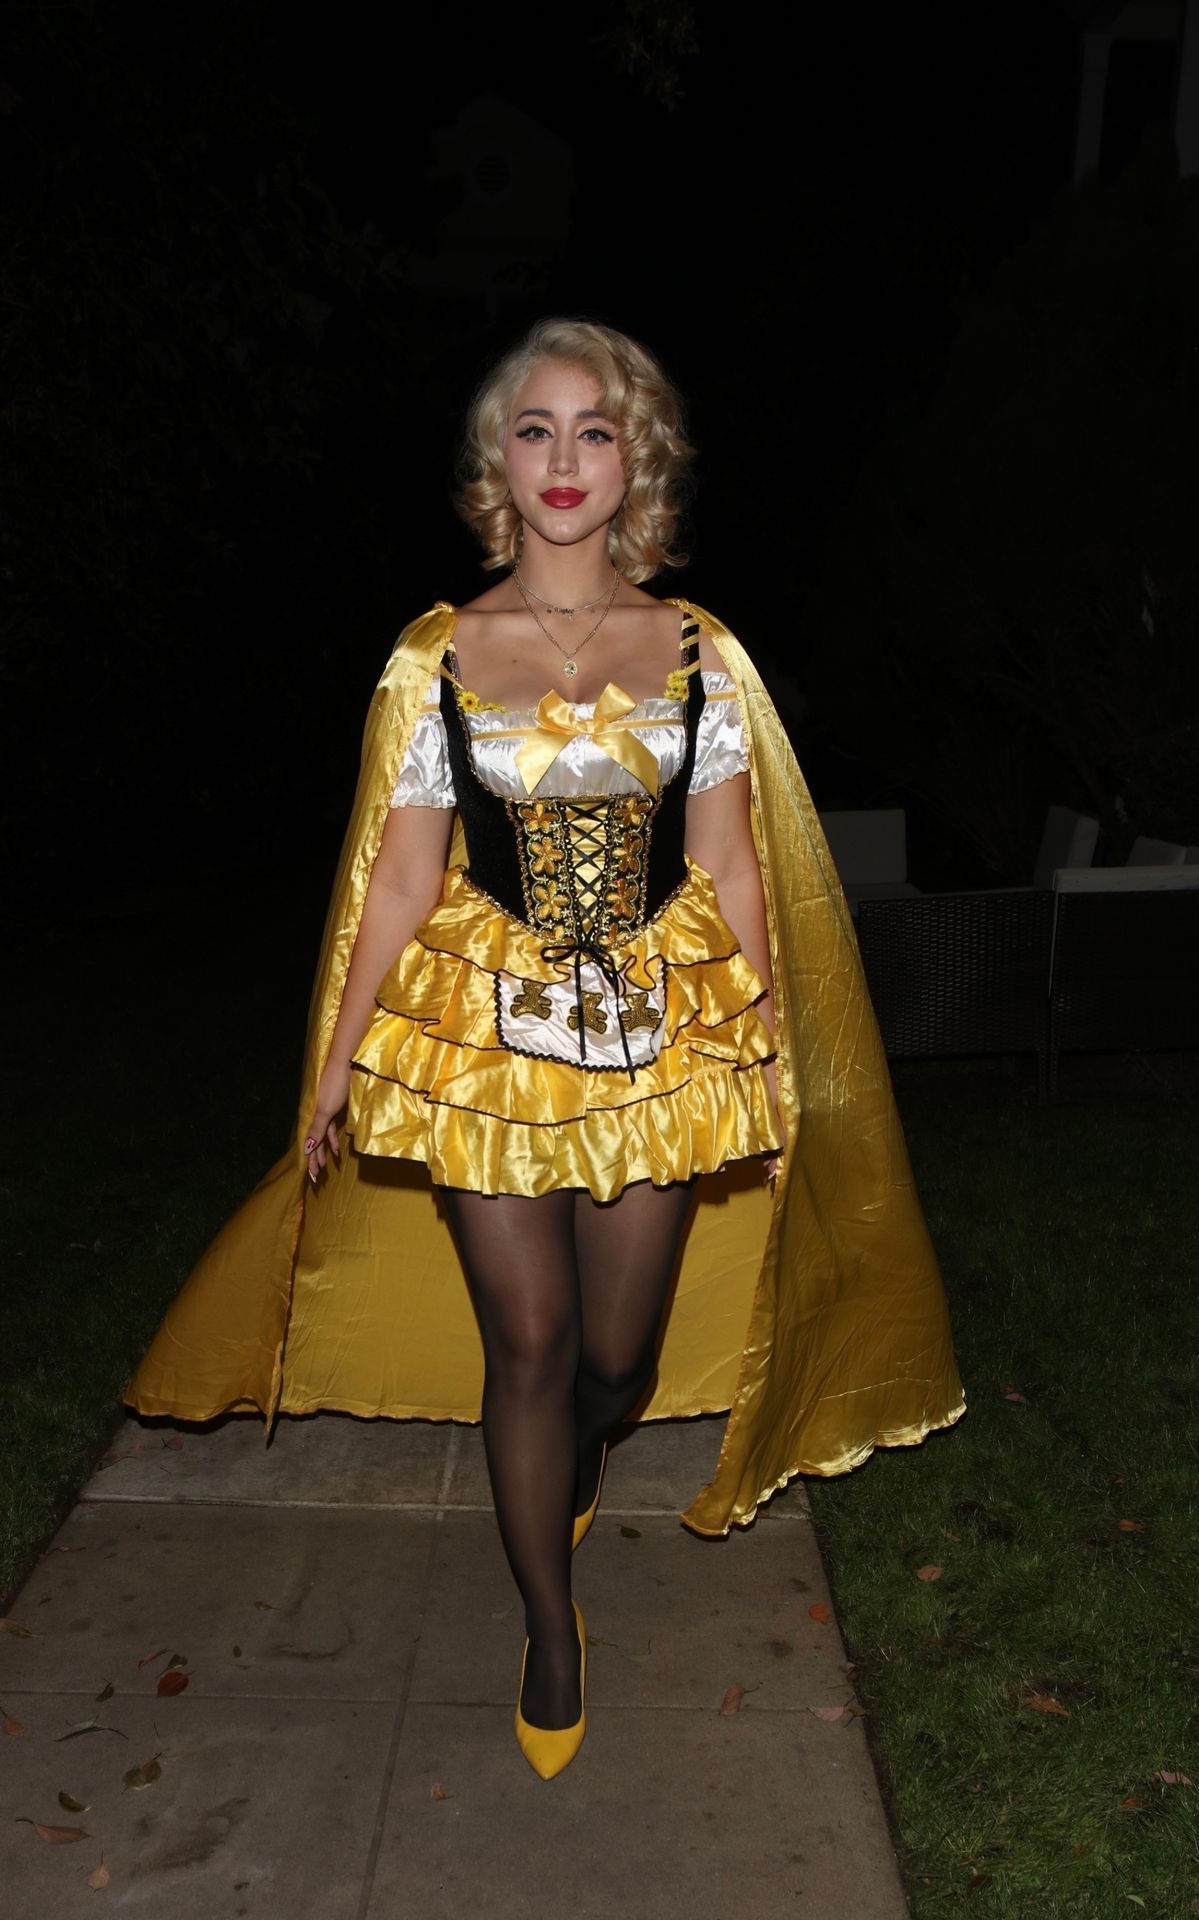 Caylee Cowan is Seen as Goldilocks at a Halloween Party (15 Photos)